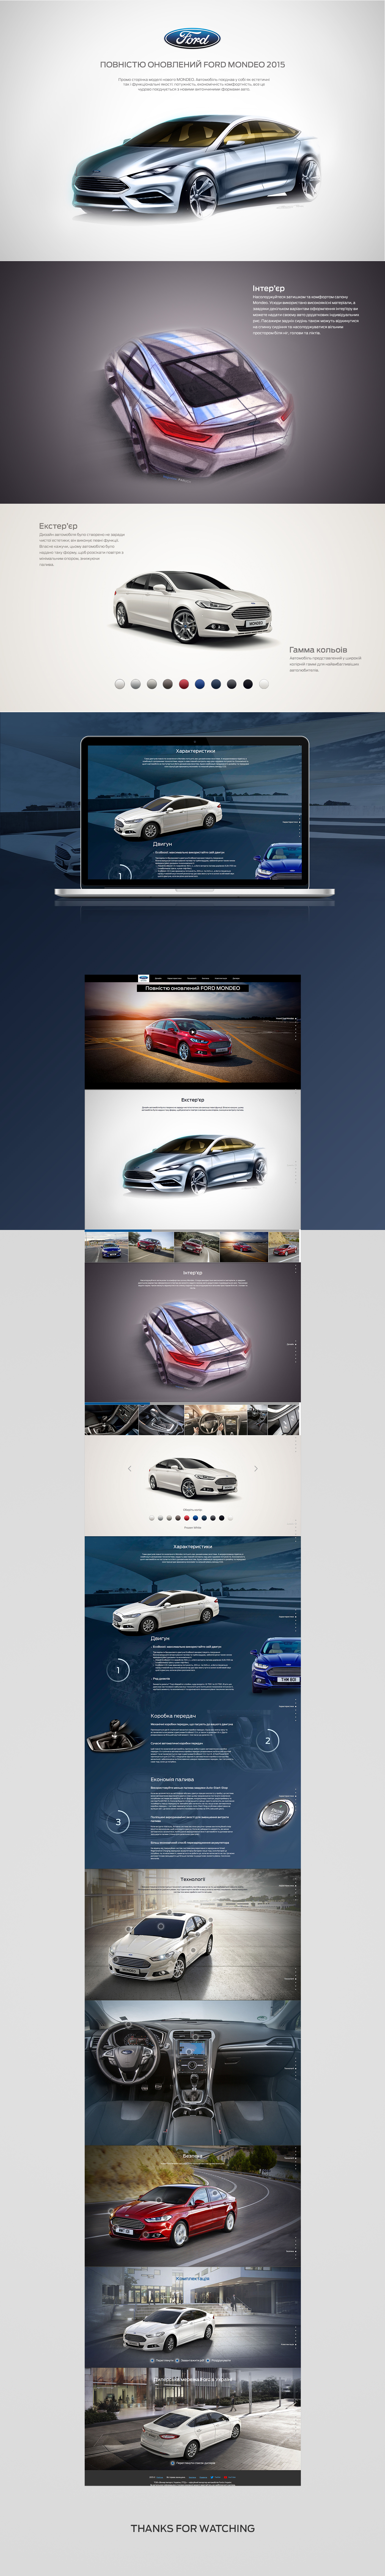 UI ux design Ford Mondeo car new speed power Web Auto scroll 2015 year ukraine